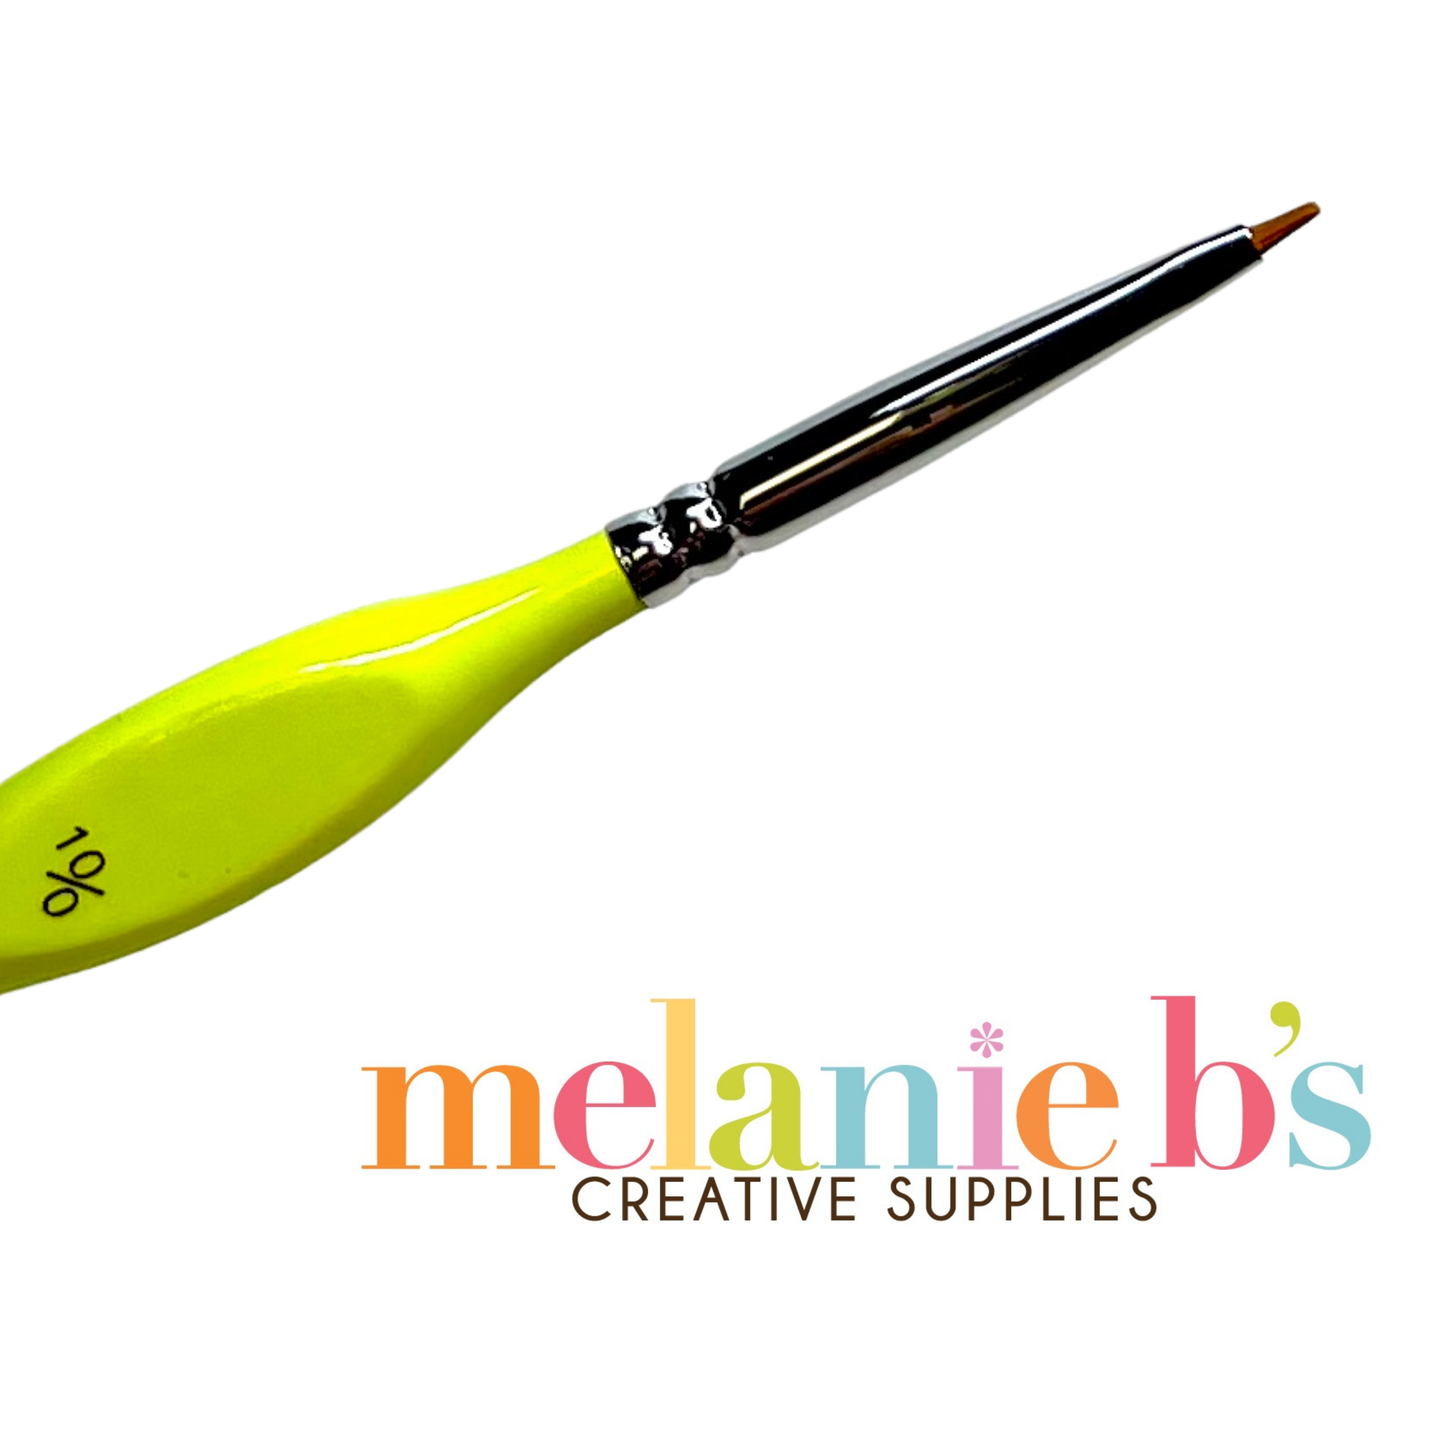 Melanie B's Custom Paint Brush Singles - ALL